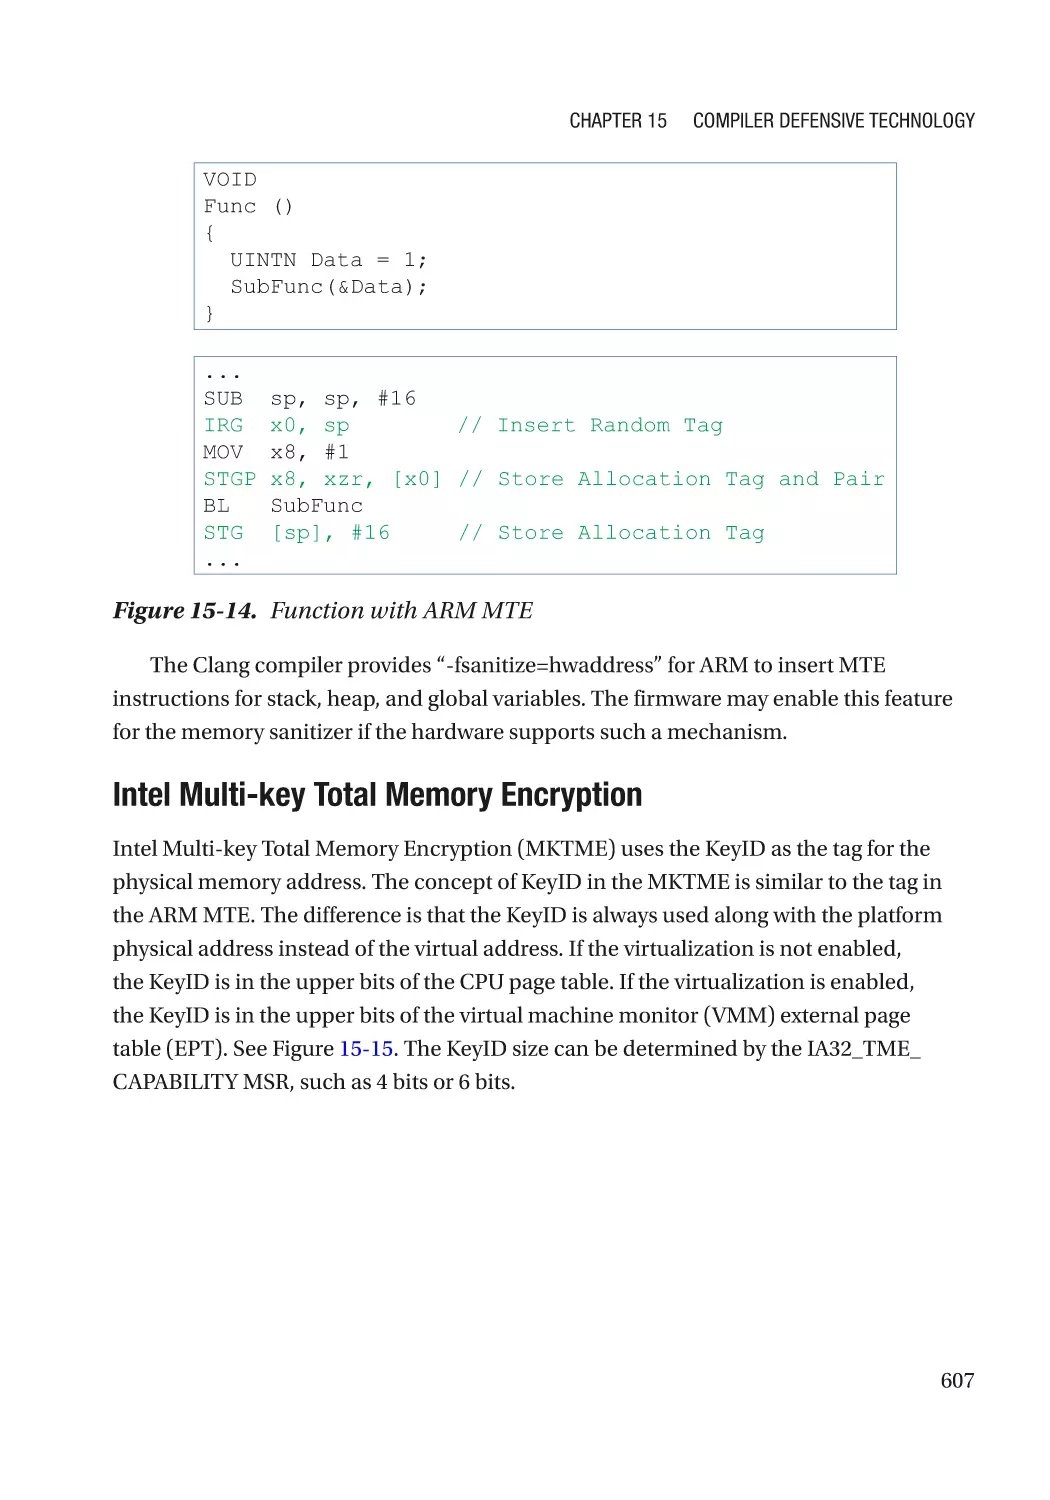 Intel Multi-key Total Memory Encryption